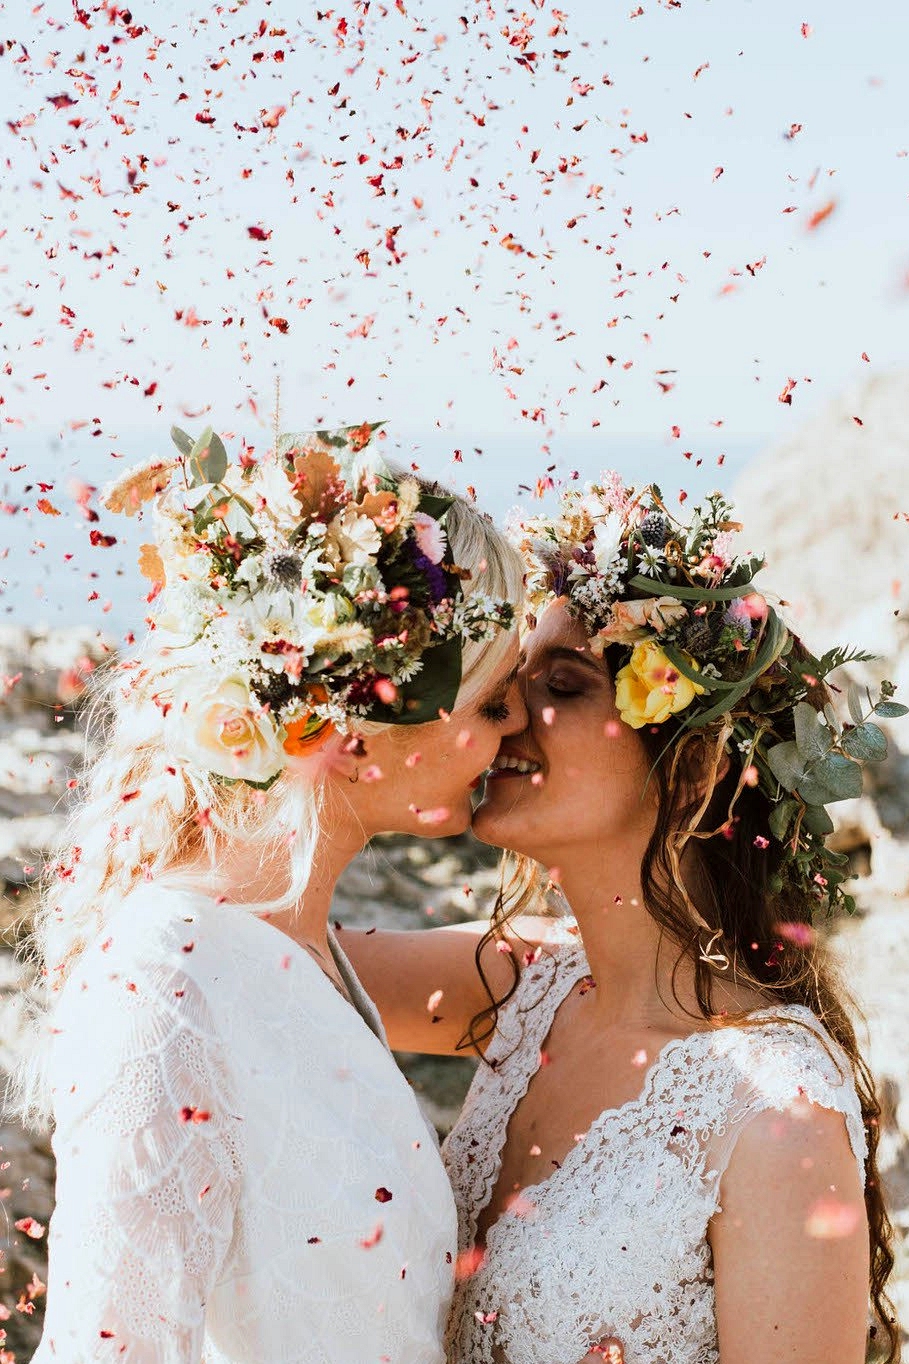 brides kiss as confetti falls around them